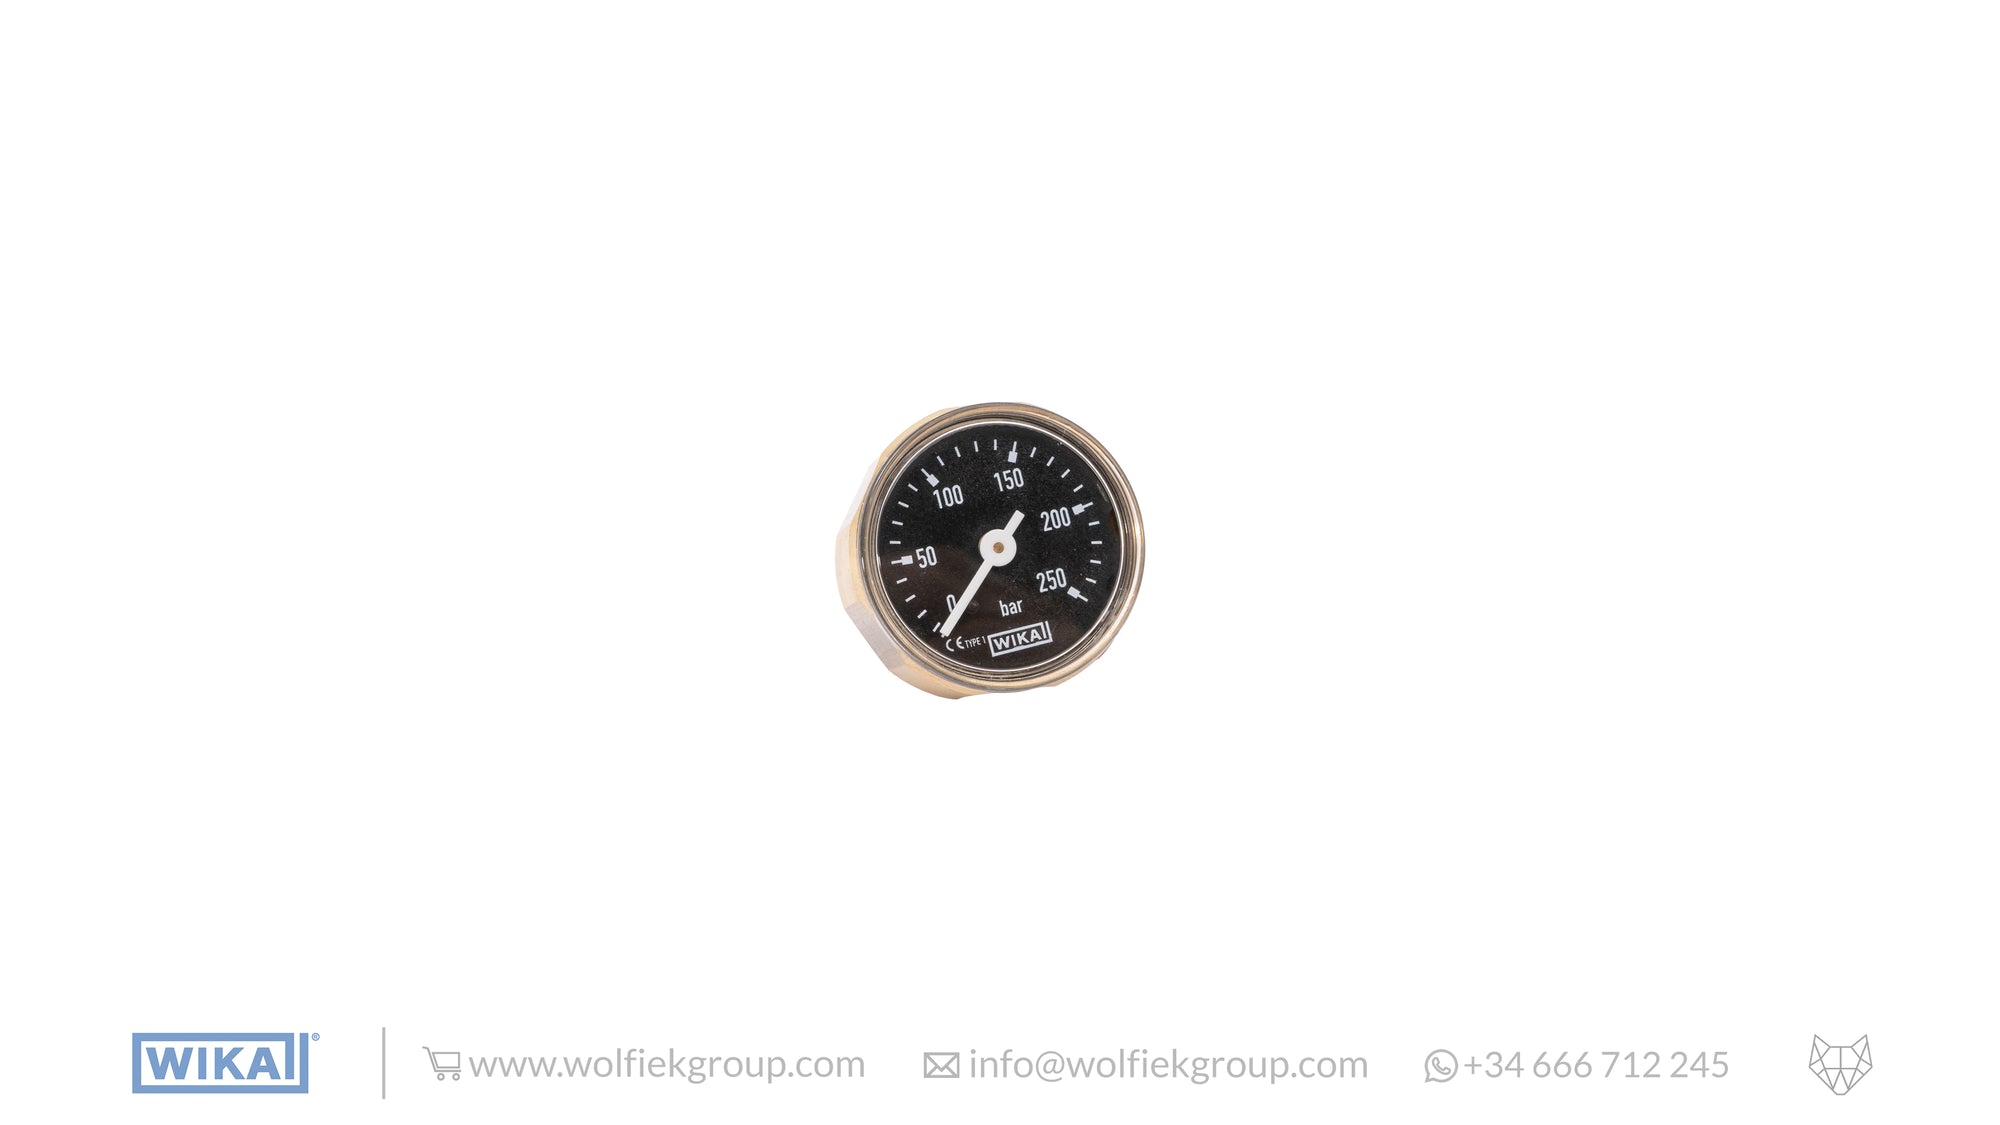 Wika analogue gauge that measures pressure in black